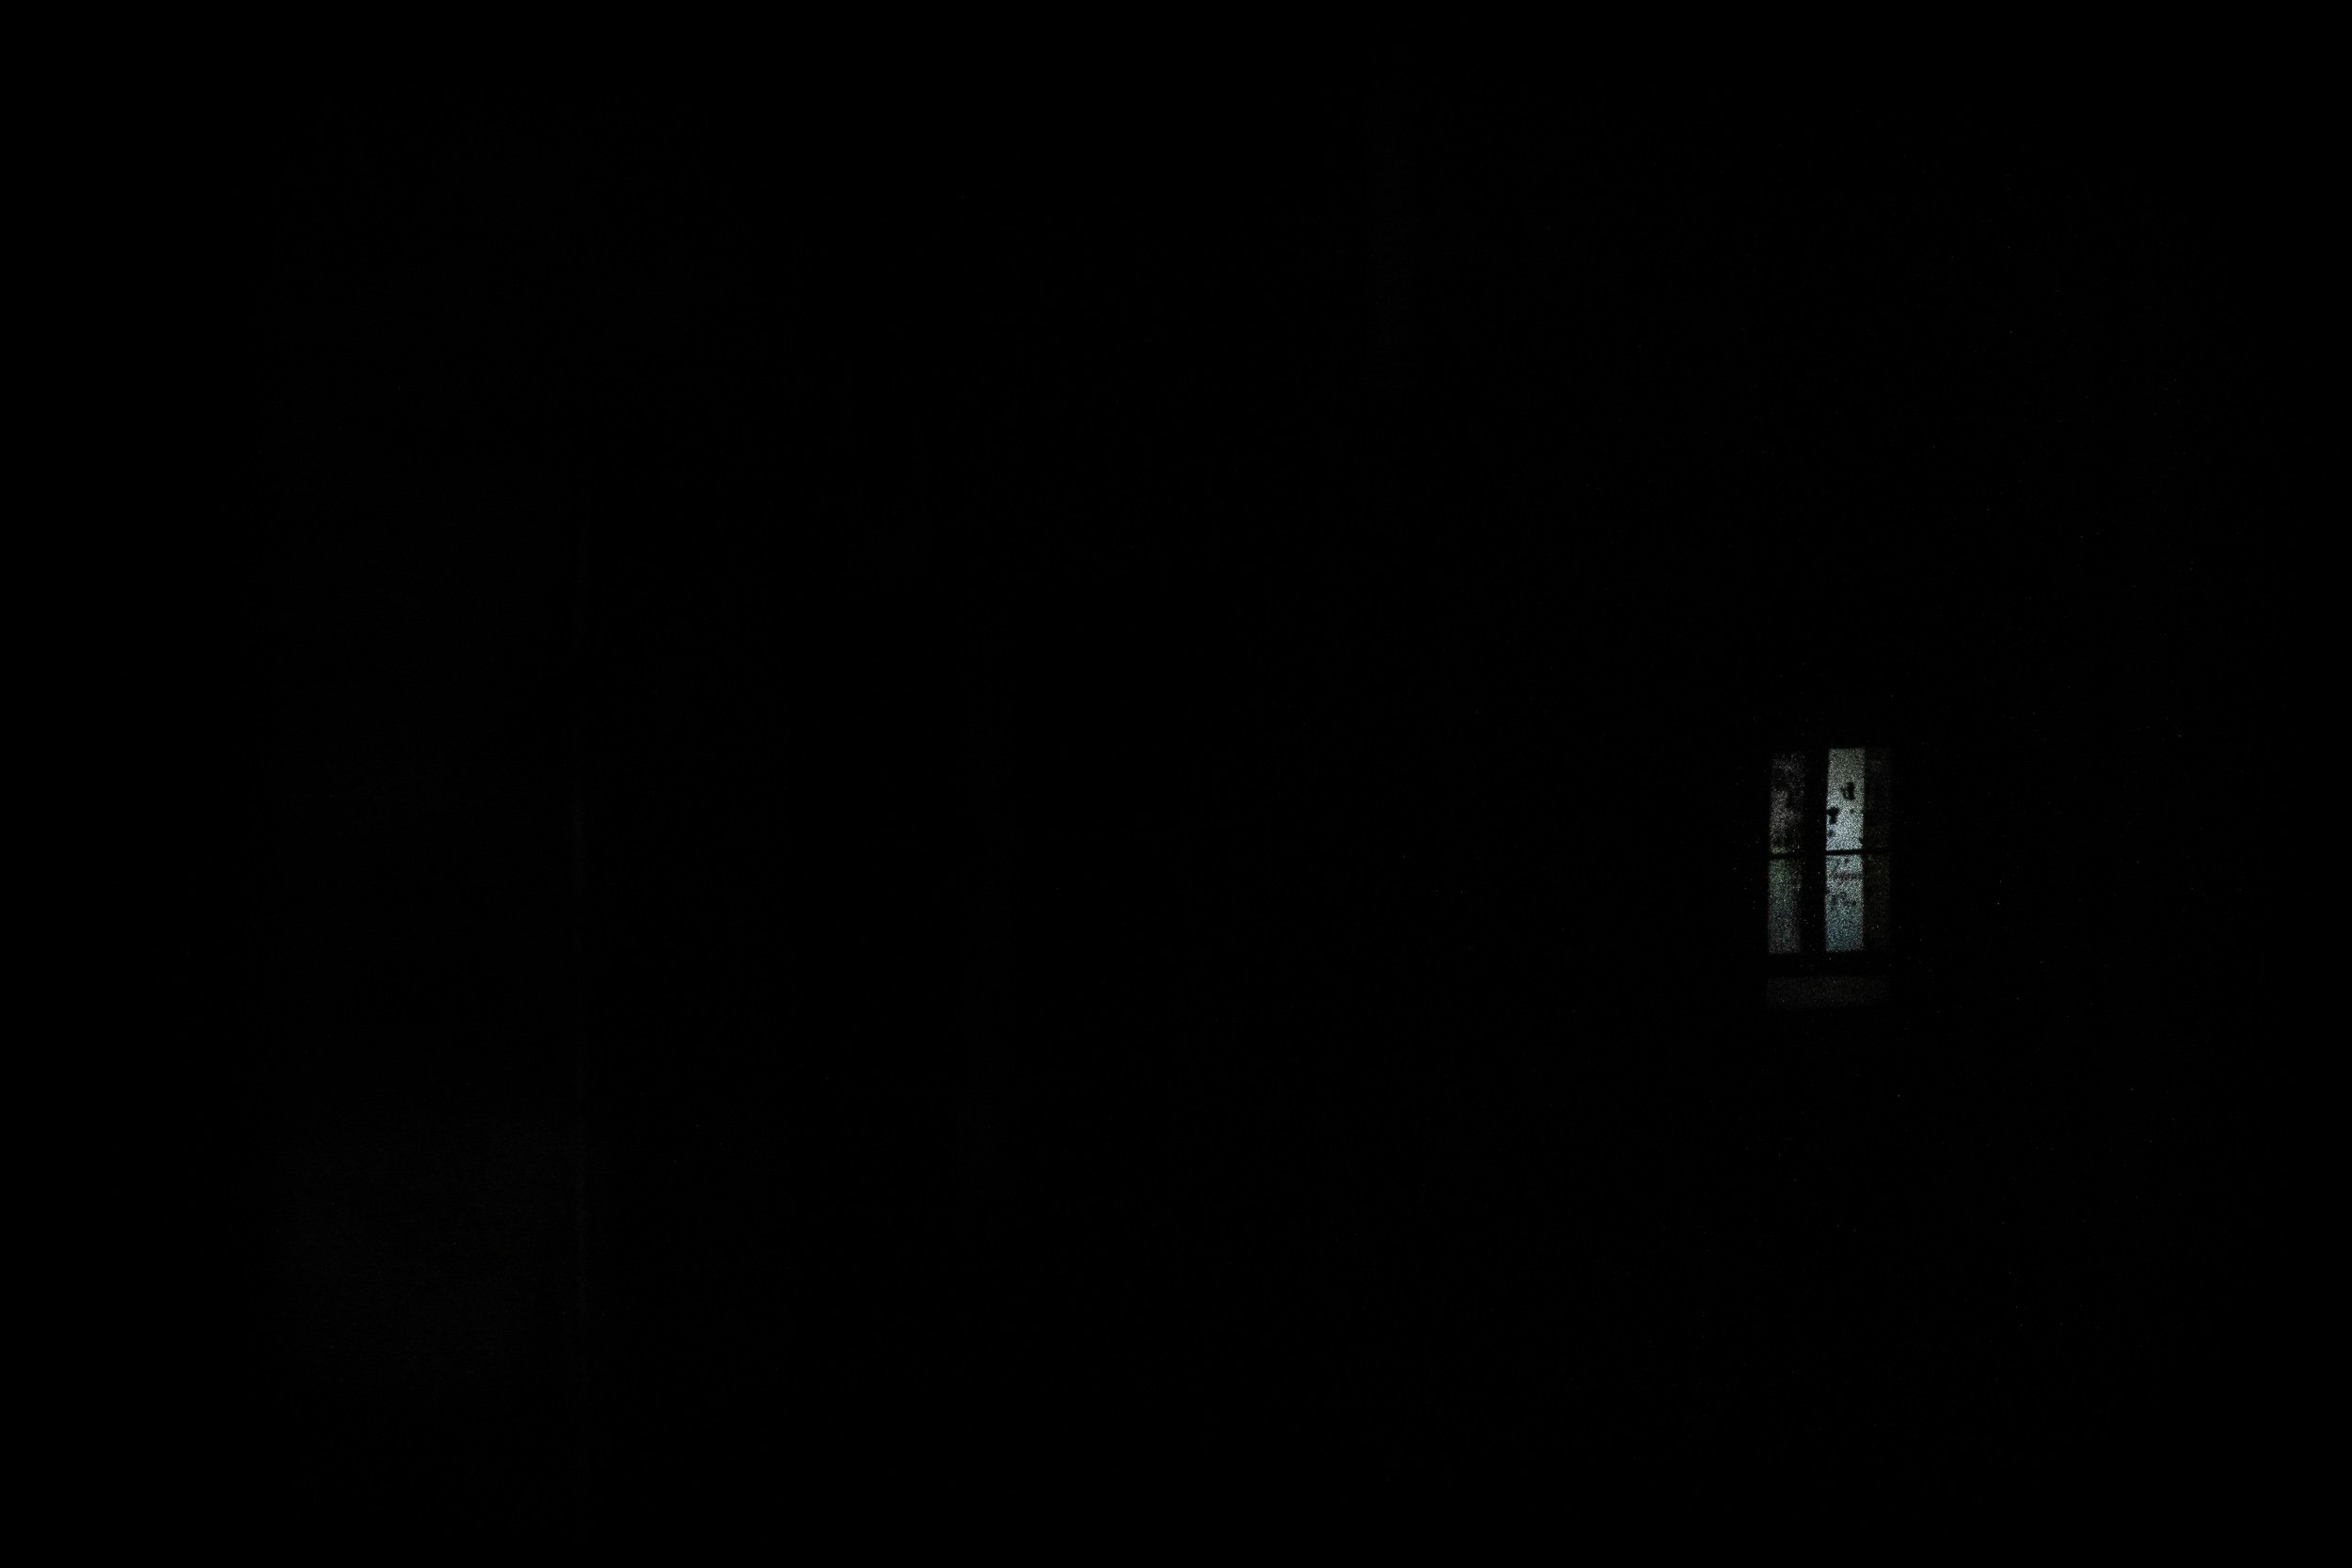 03-window-light-darkness.jpg